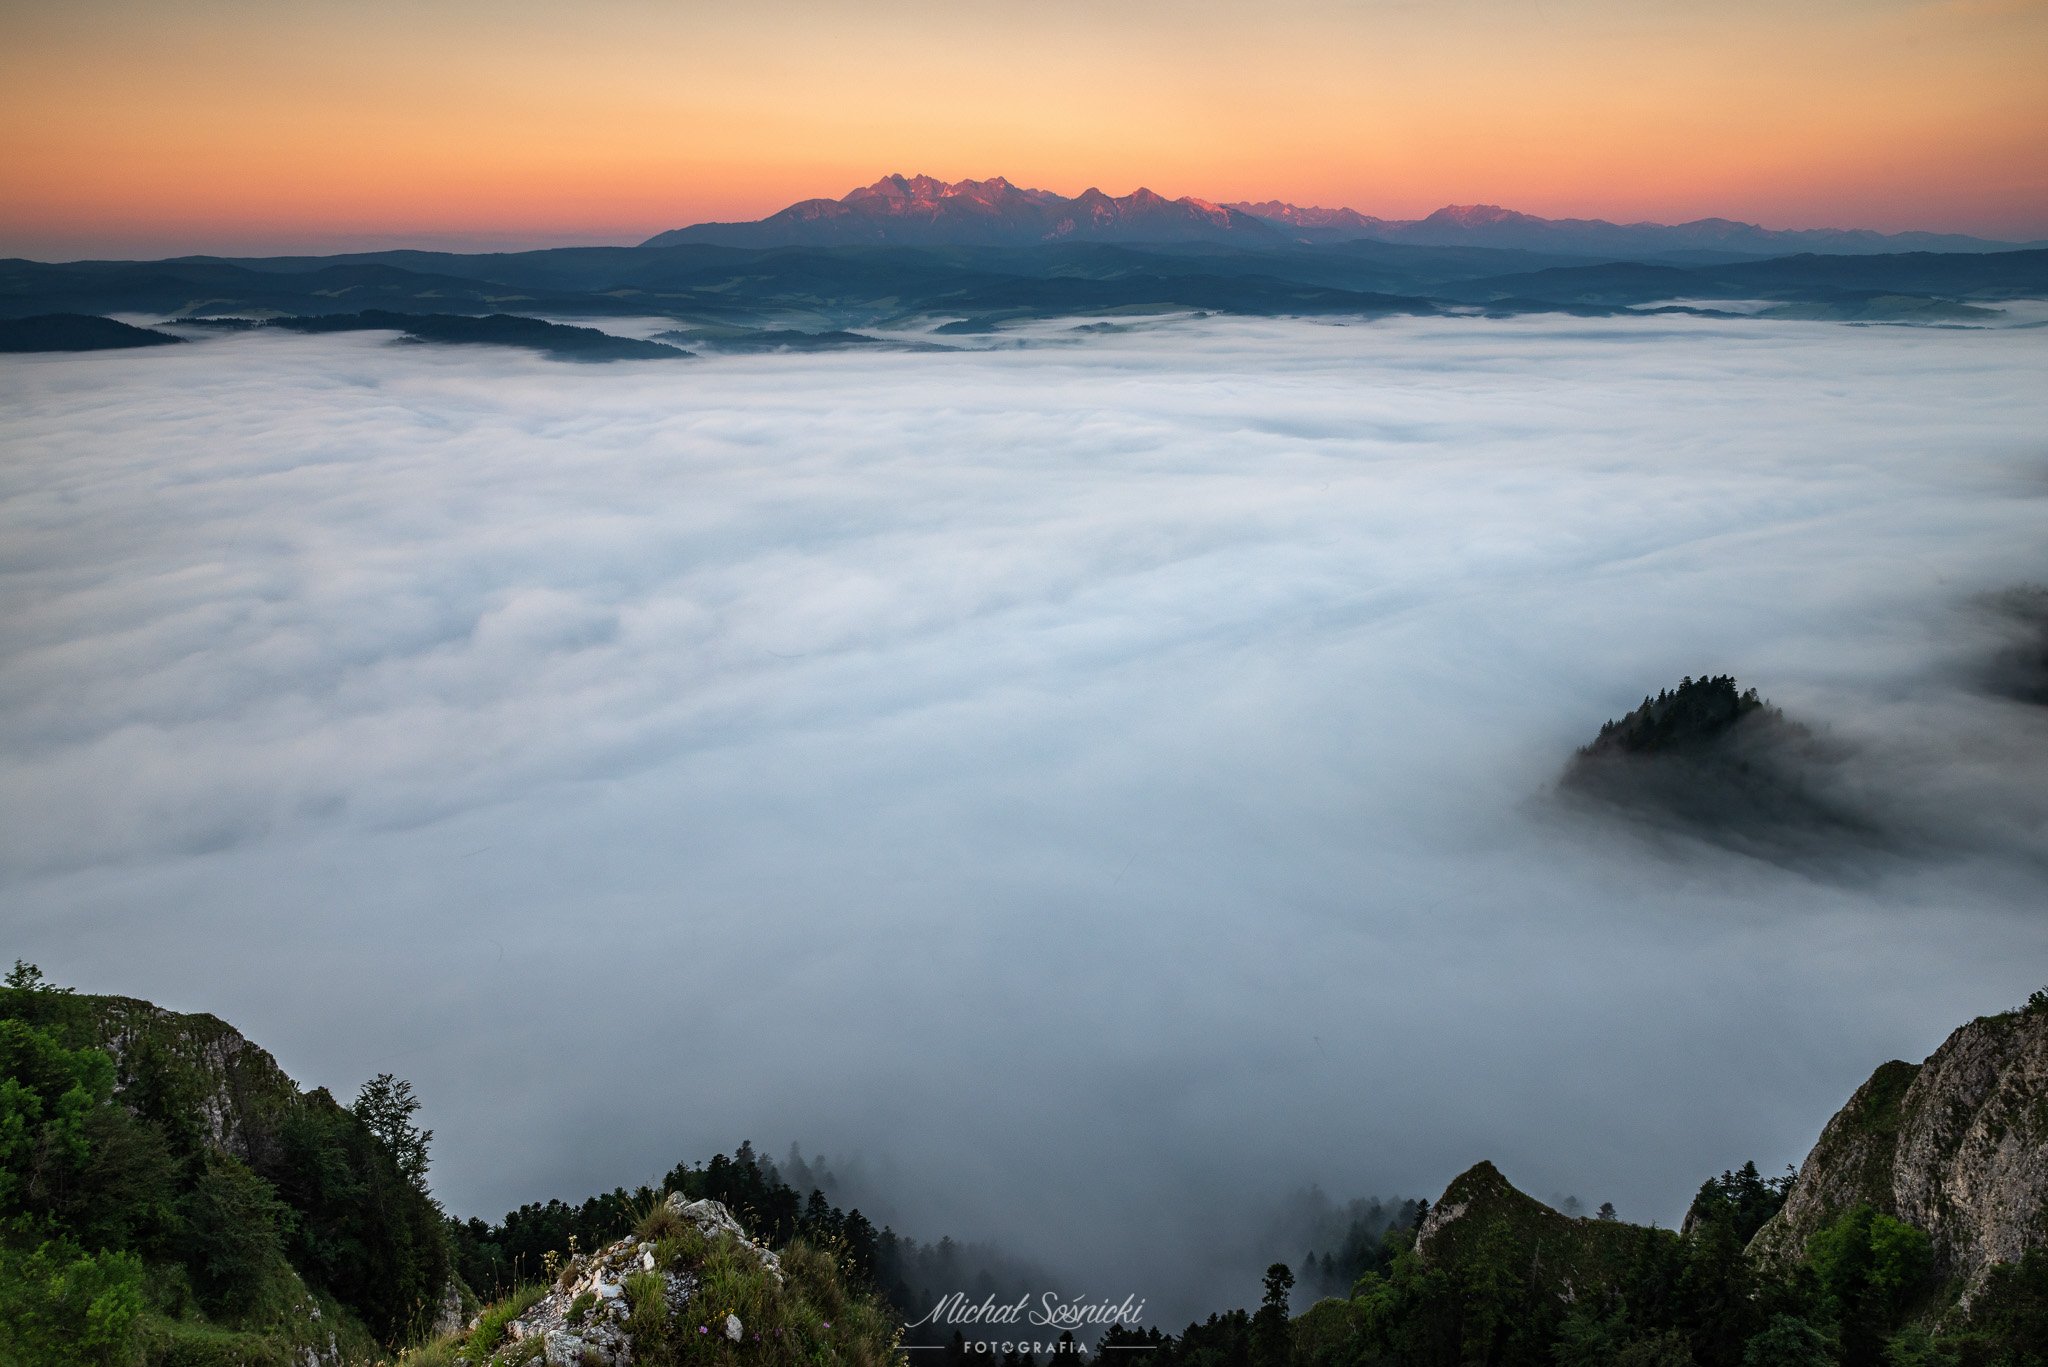 #poland #foggy #sunrise #mountains #landscape #photo #amazing #nature, Michał Sośnicki